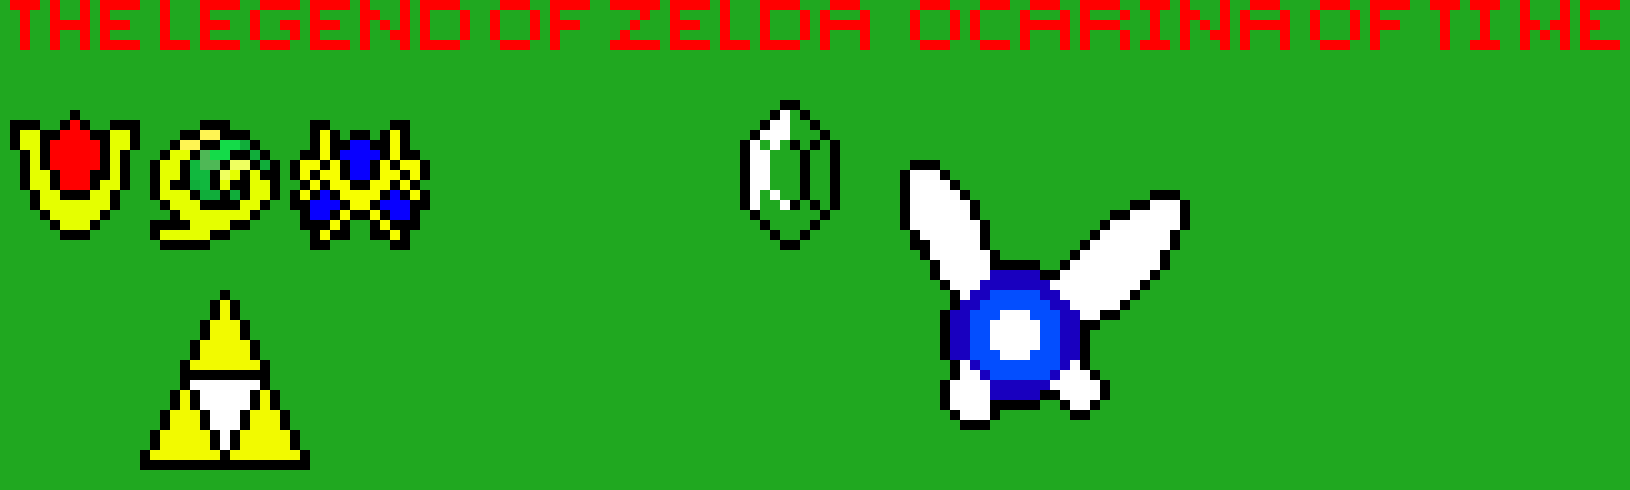 Legend Of Zelda Ocarina Of Time Pixel Art Maker